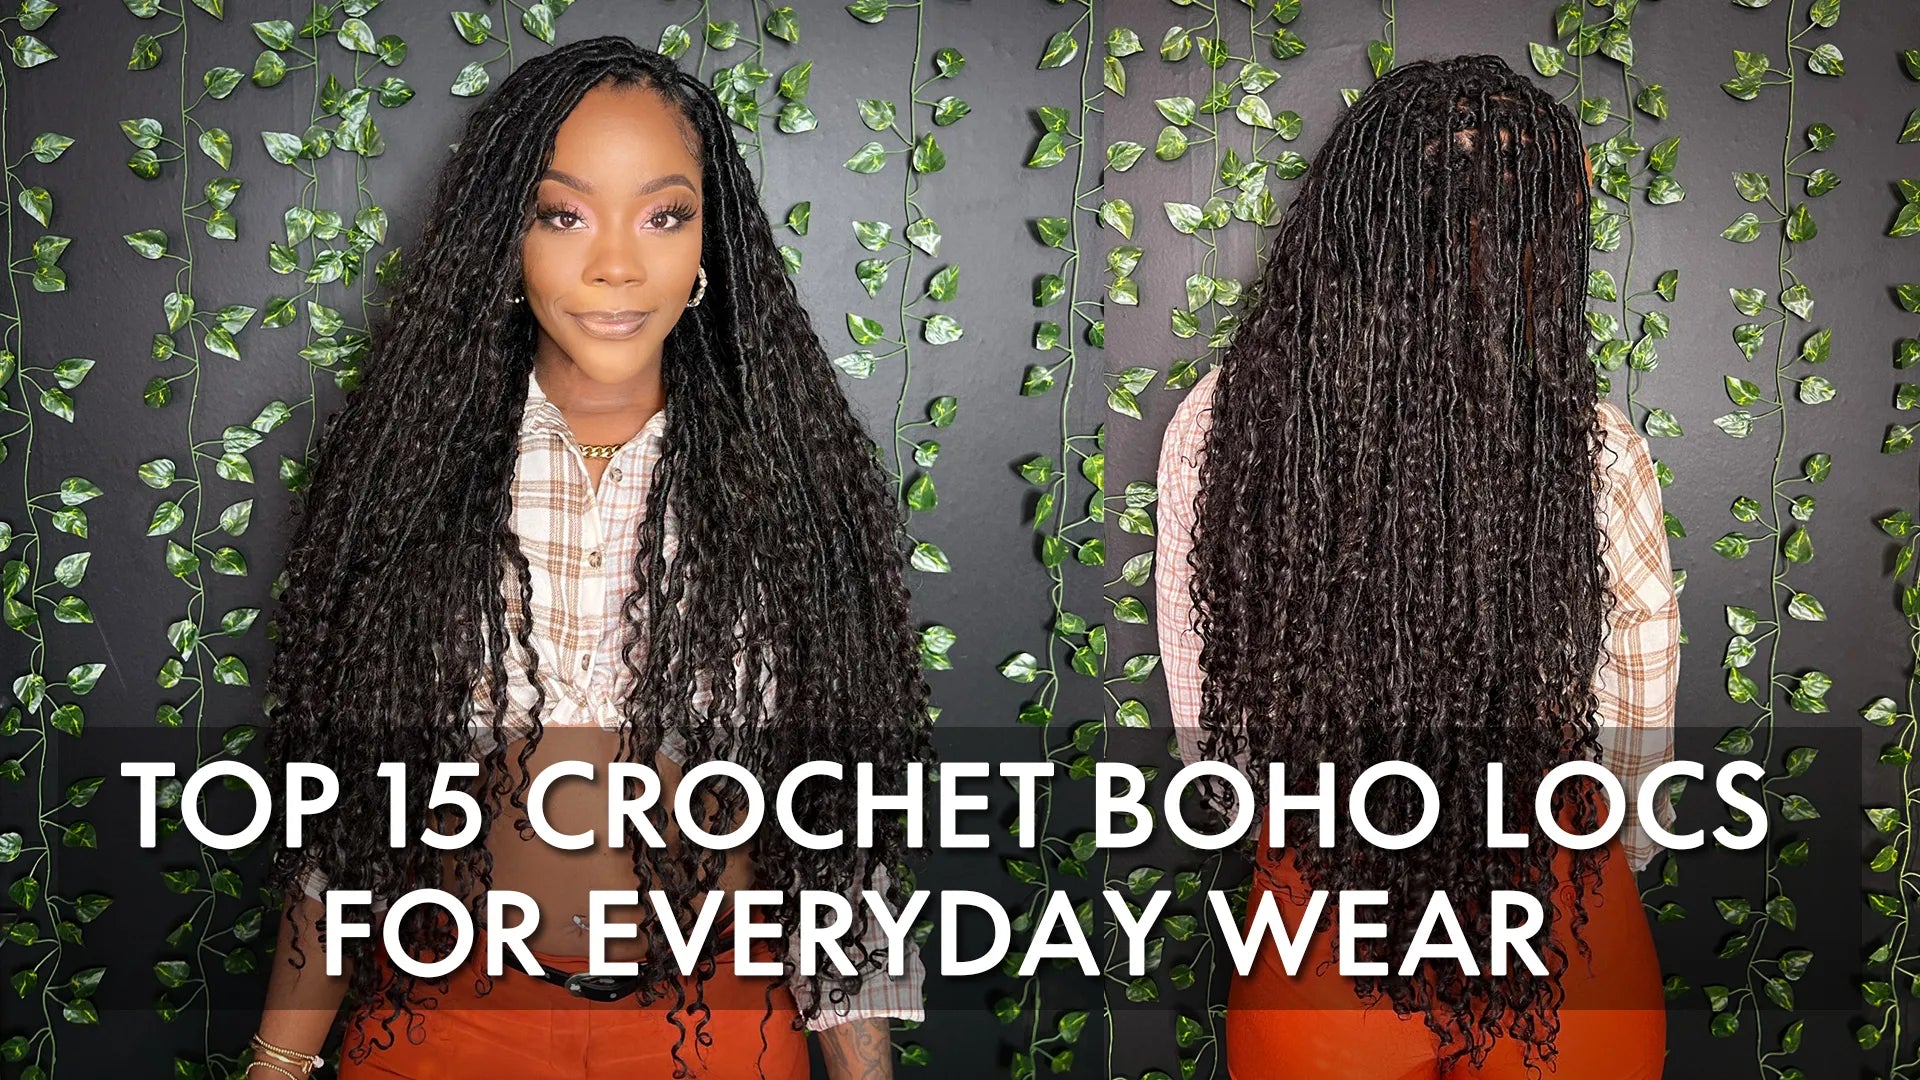 Top 15 Crochet Boho Locs for Everyday Wear